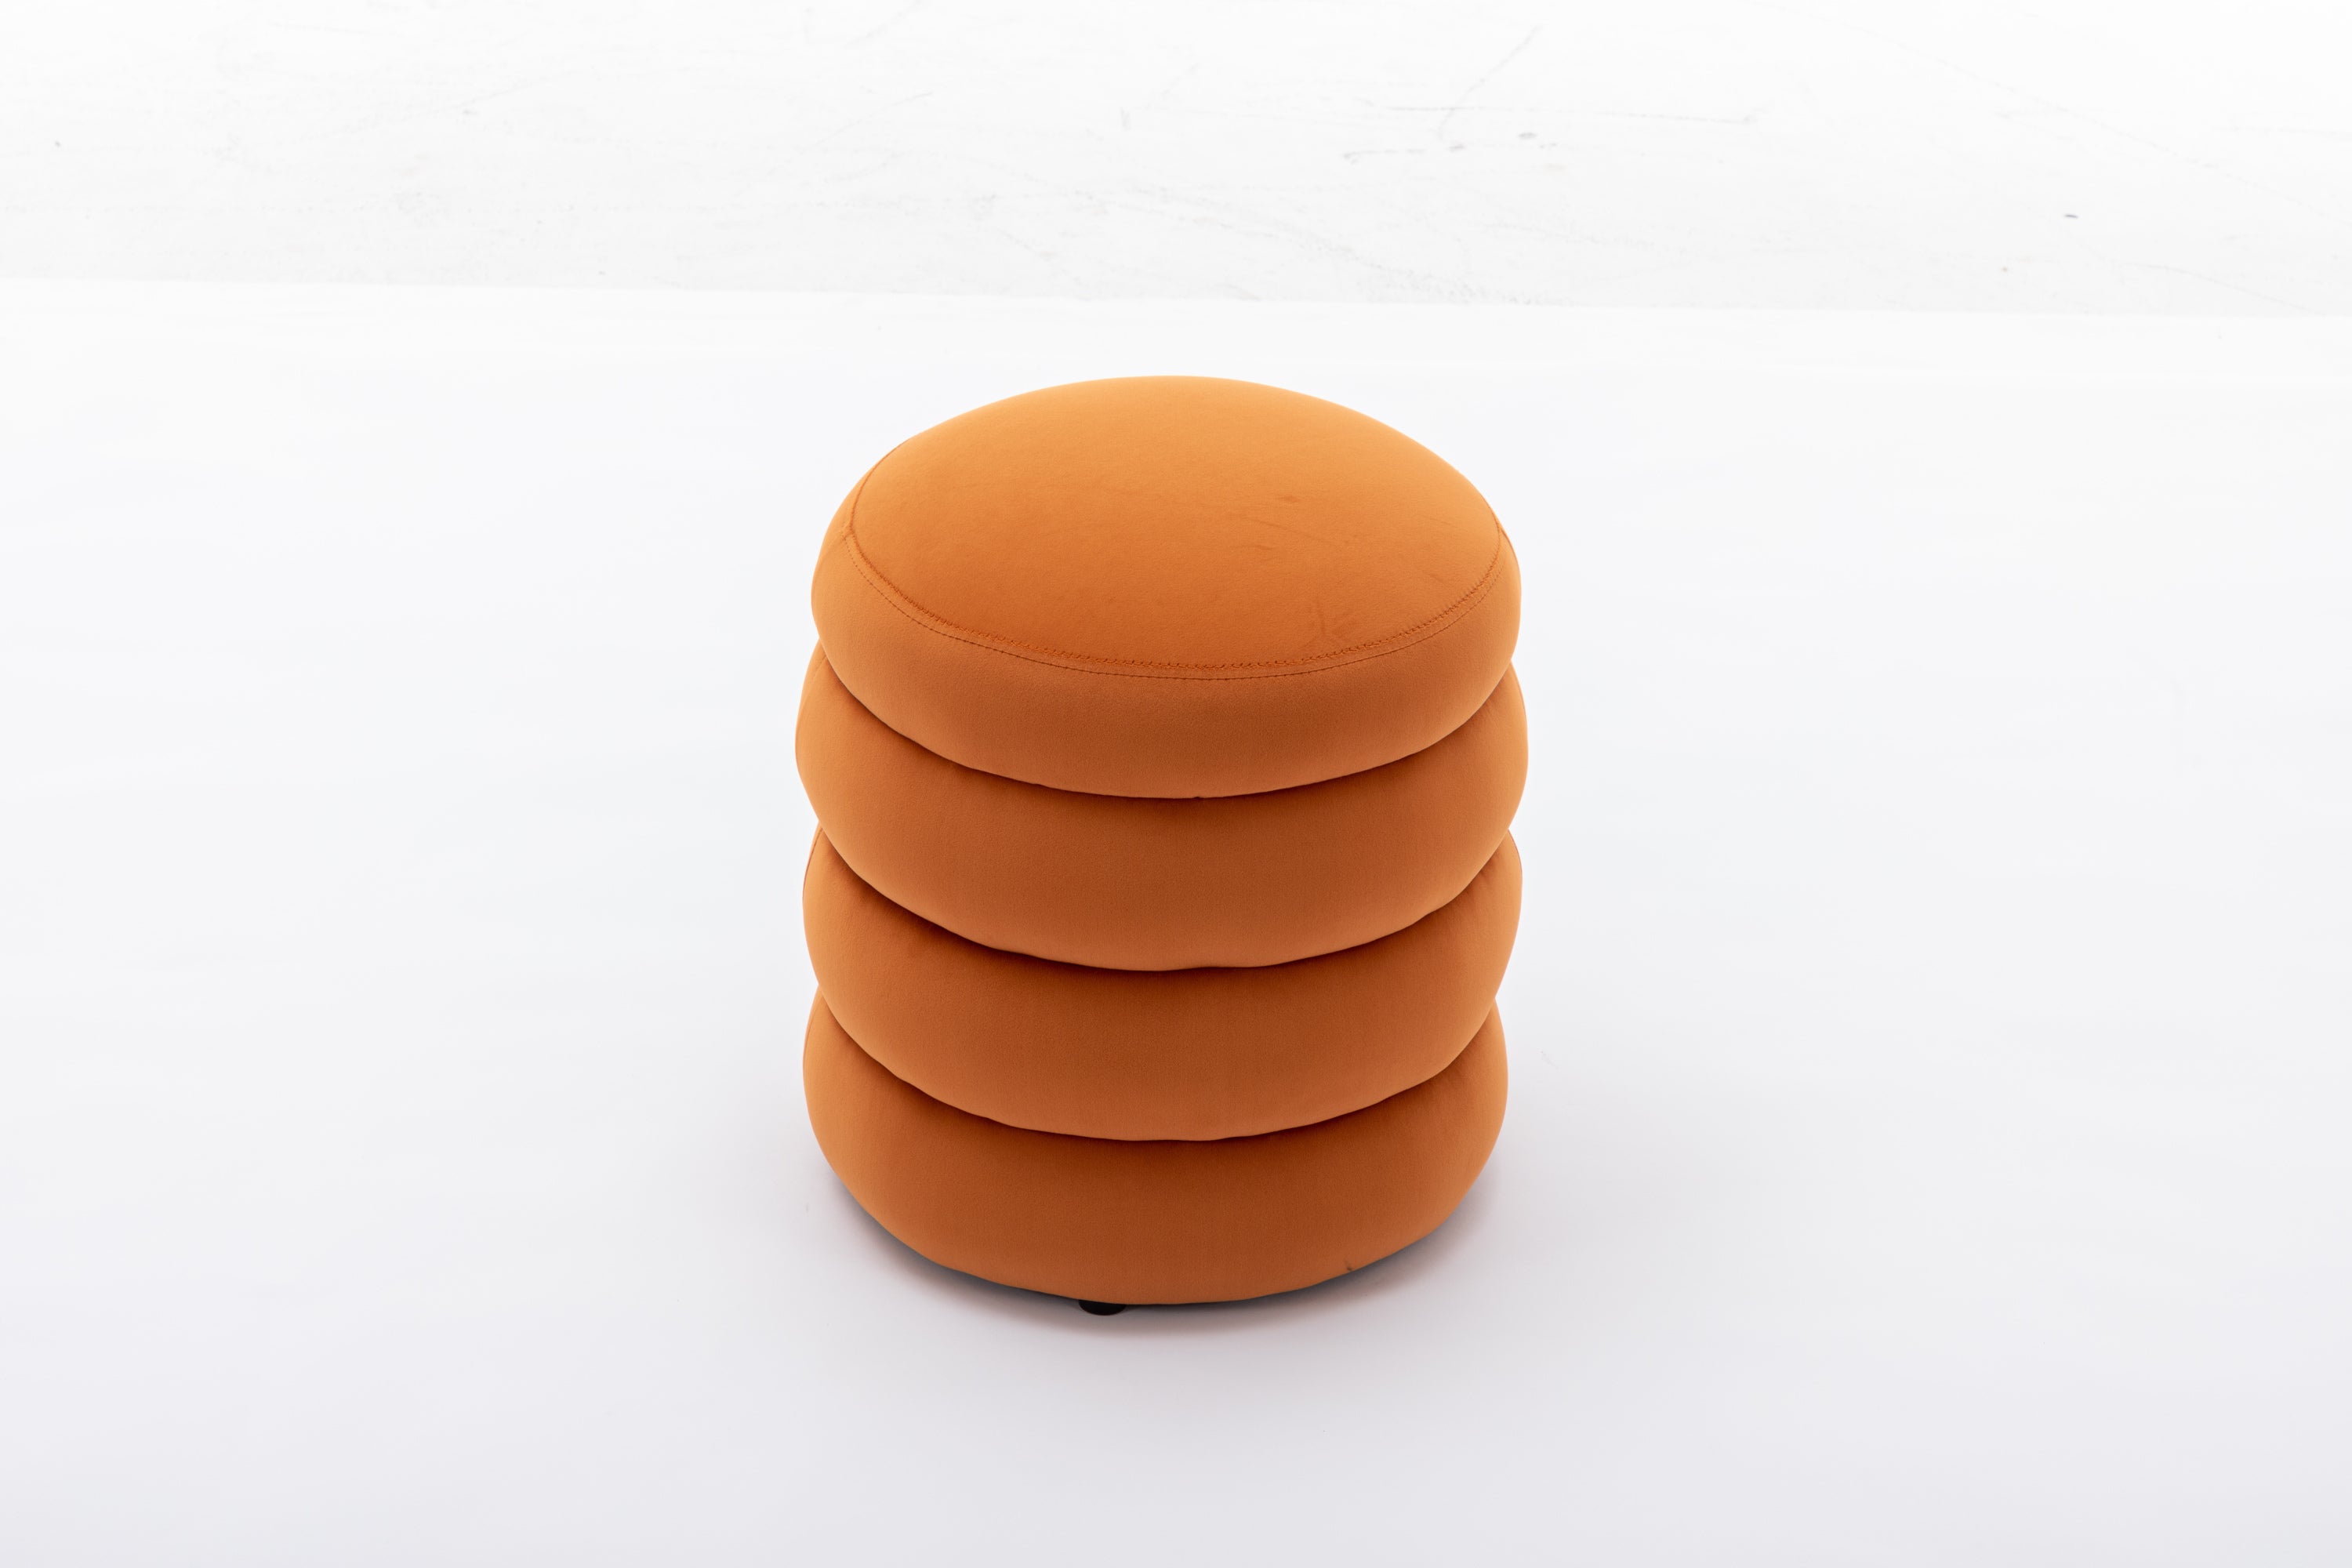 006-Soft Velvet Round Ottoman Footrest Stool,Orange